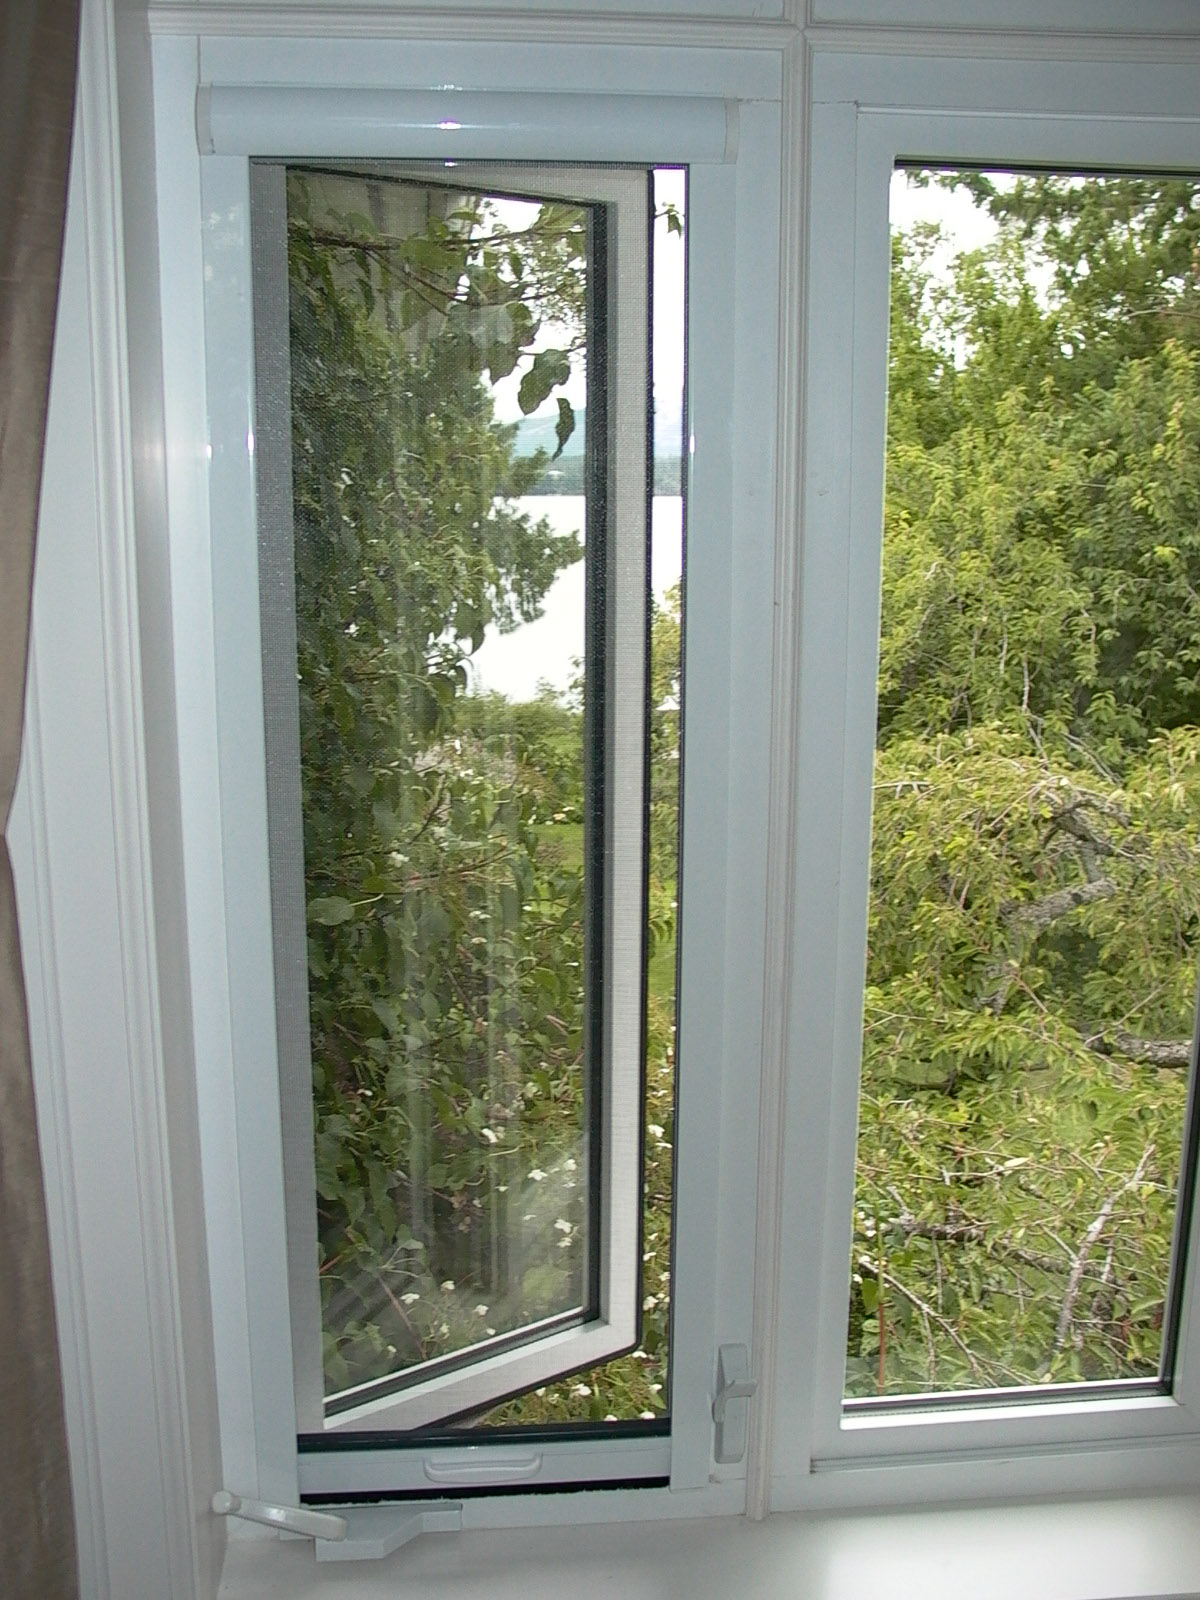  Solar casement window screen